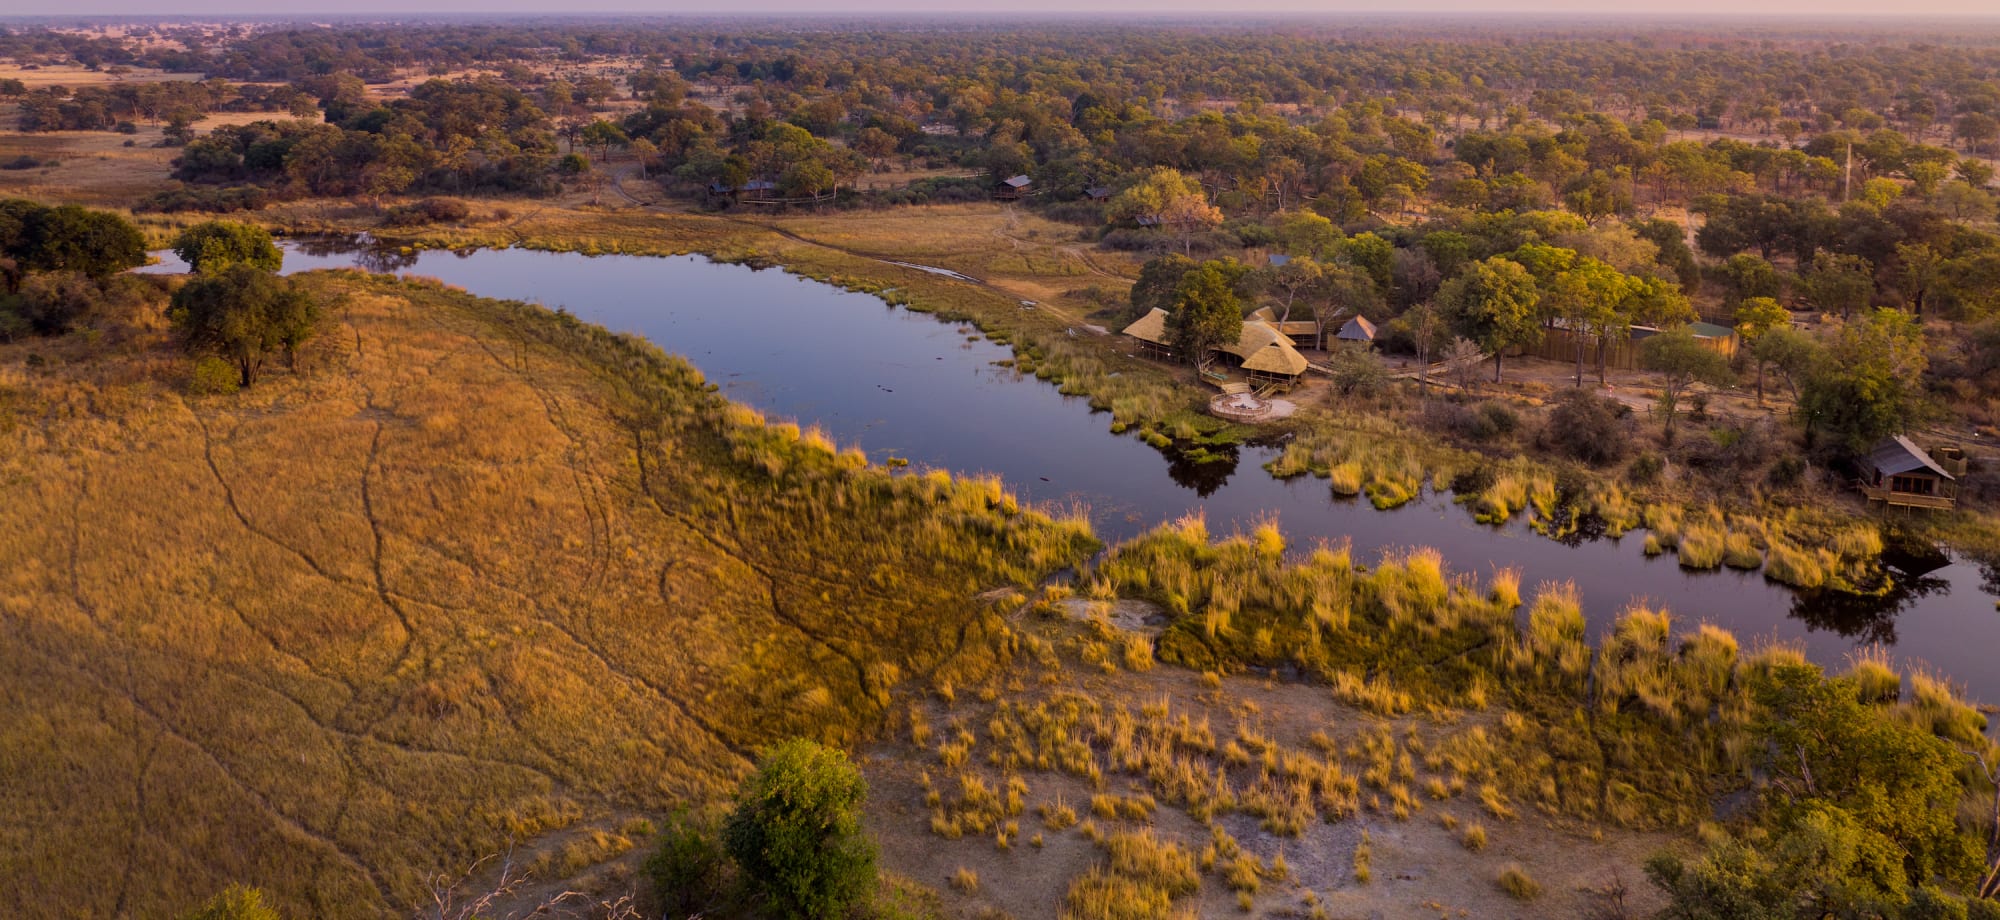 4_Rivers_Camp_botswana_Aerial_